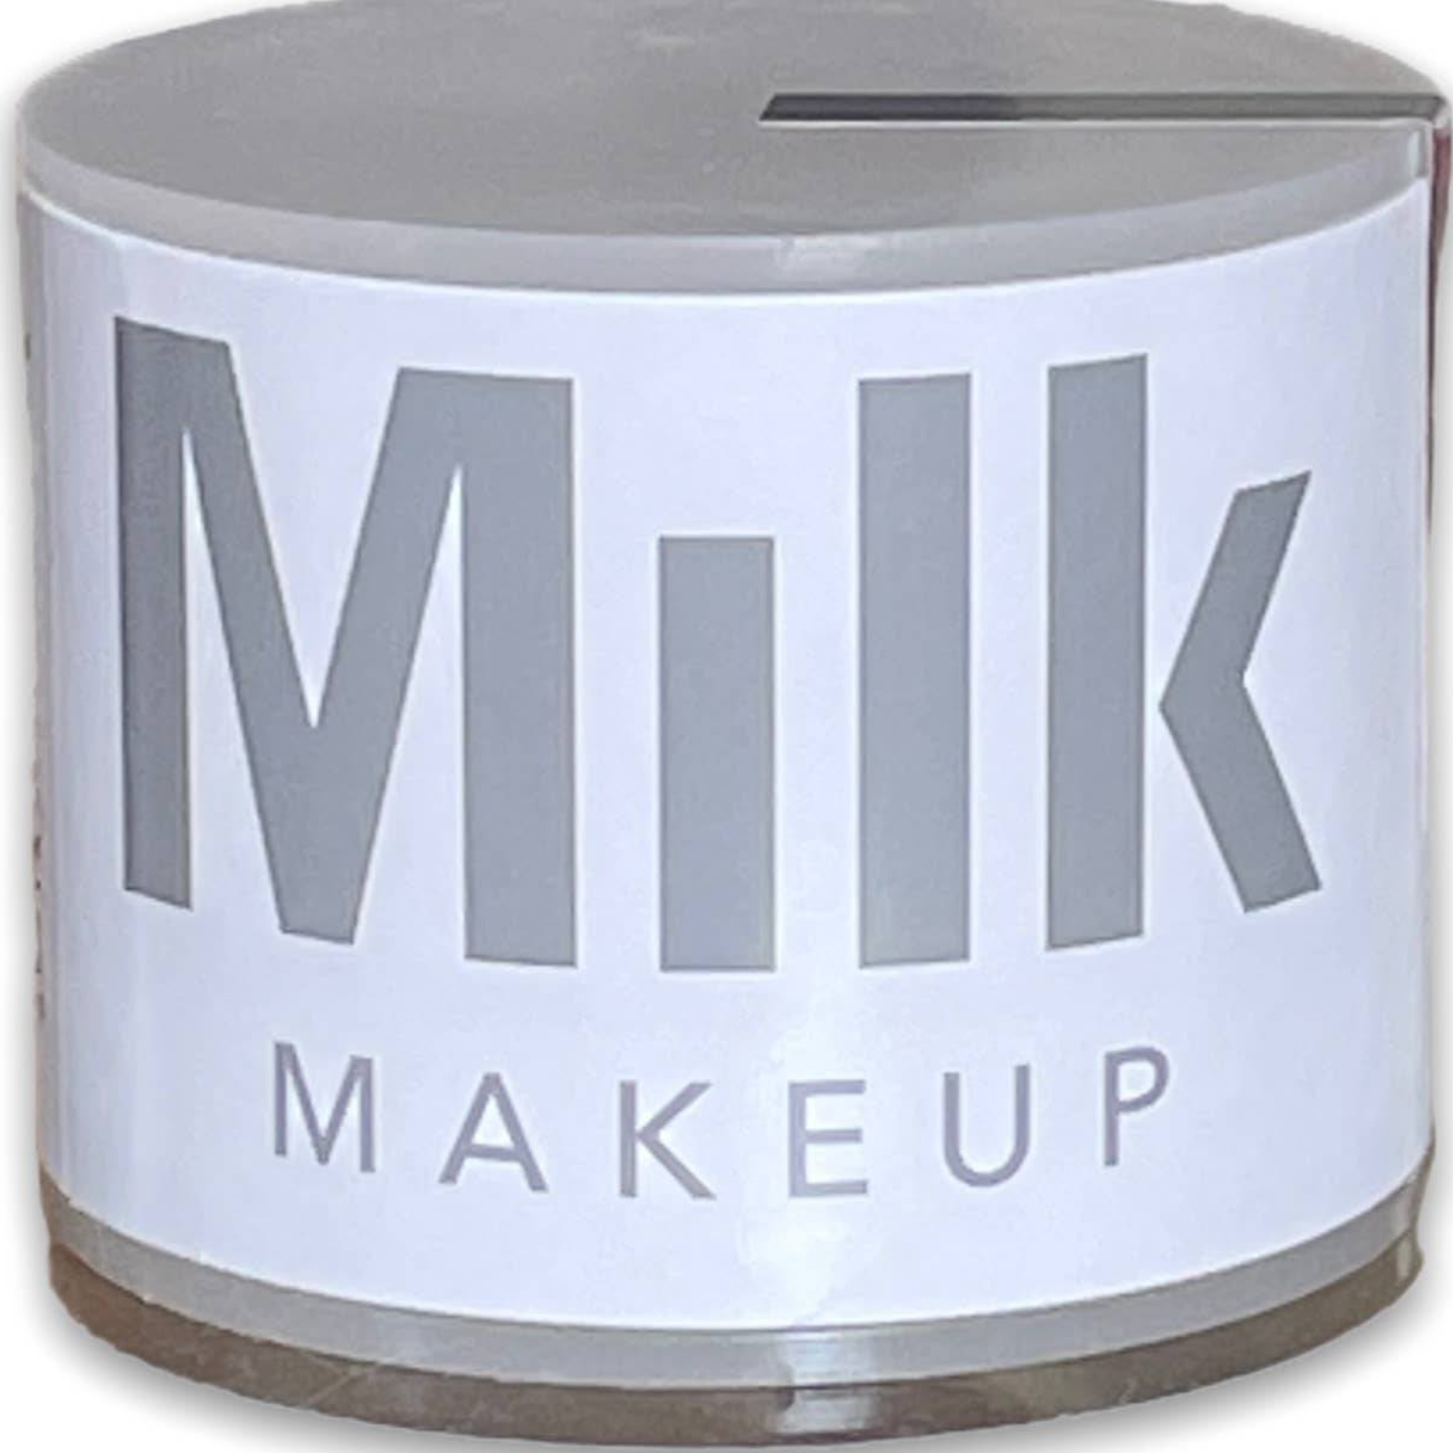 milk makeup hair skin and lip luxury salve